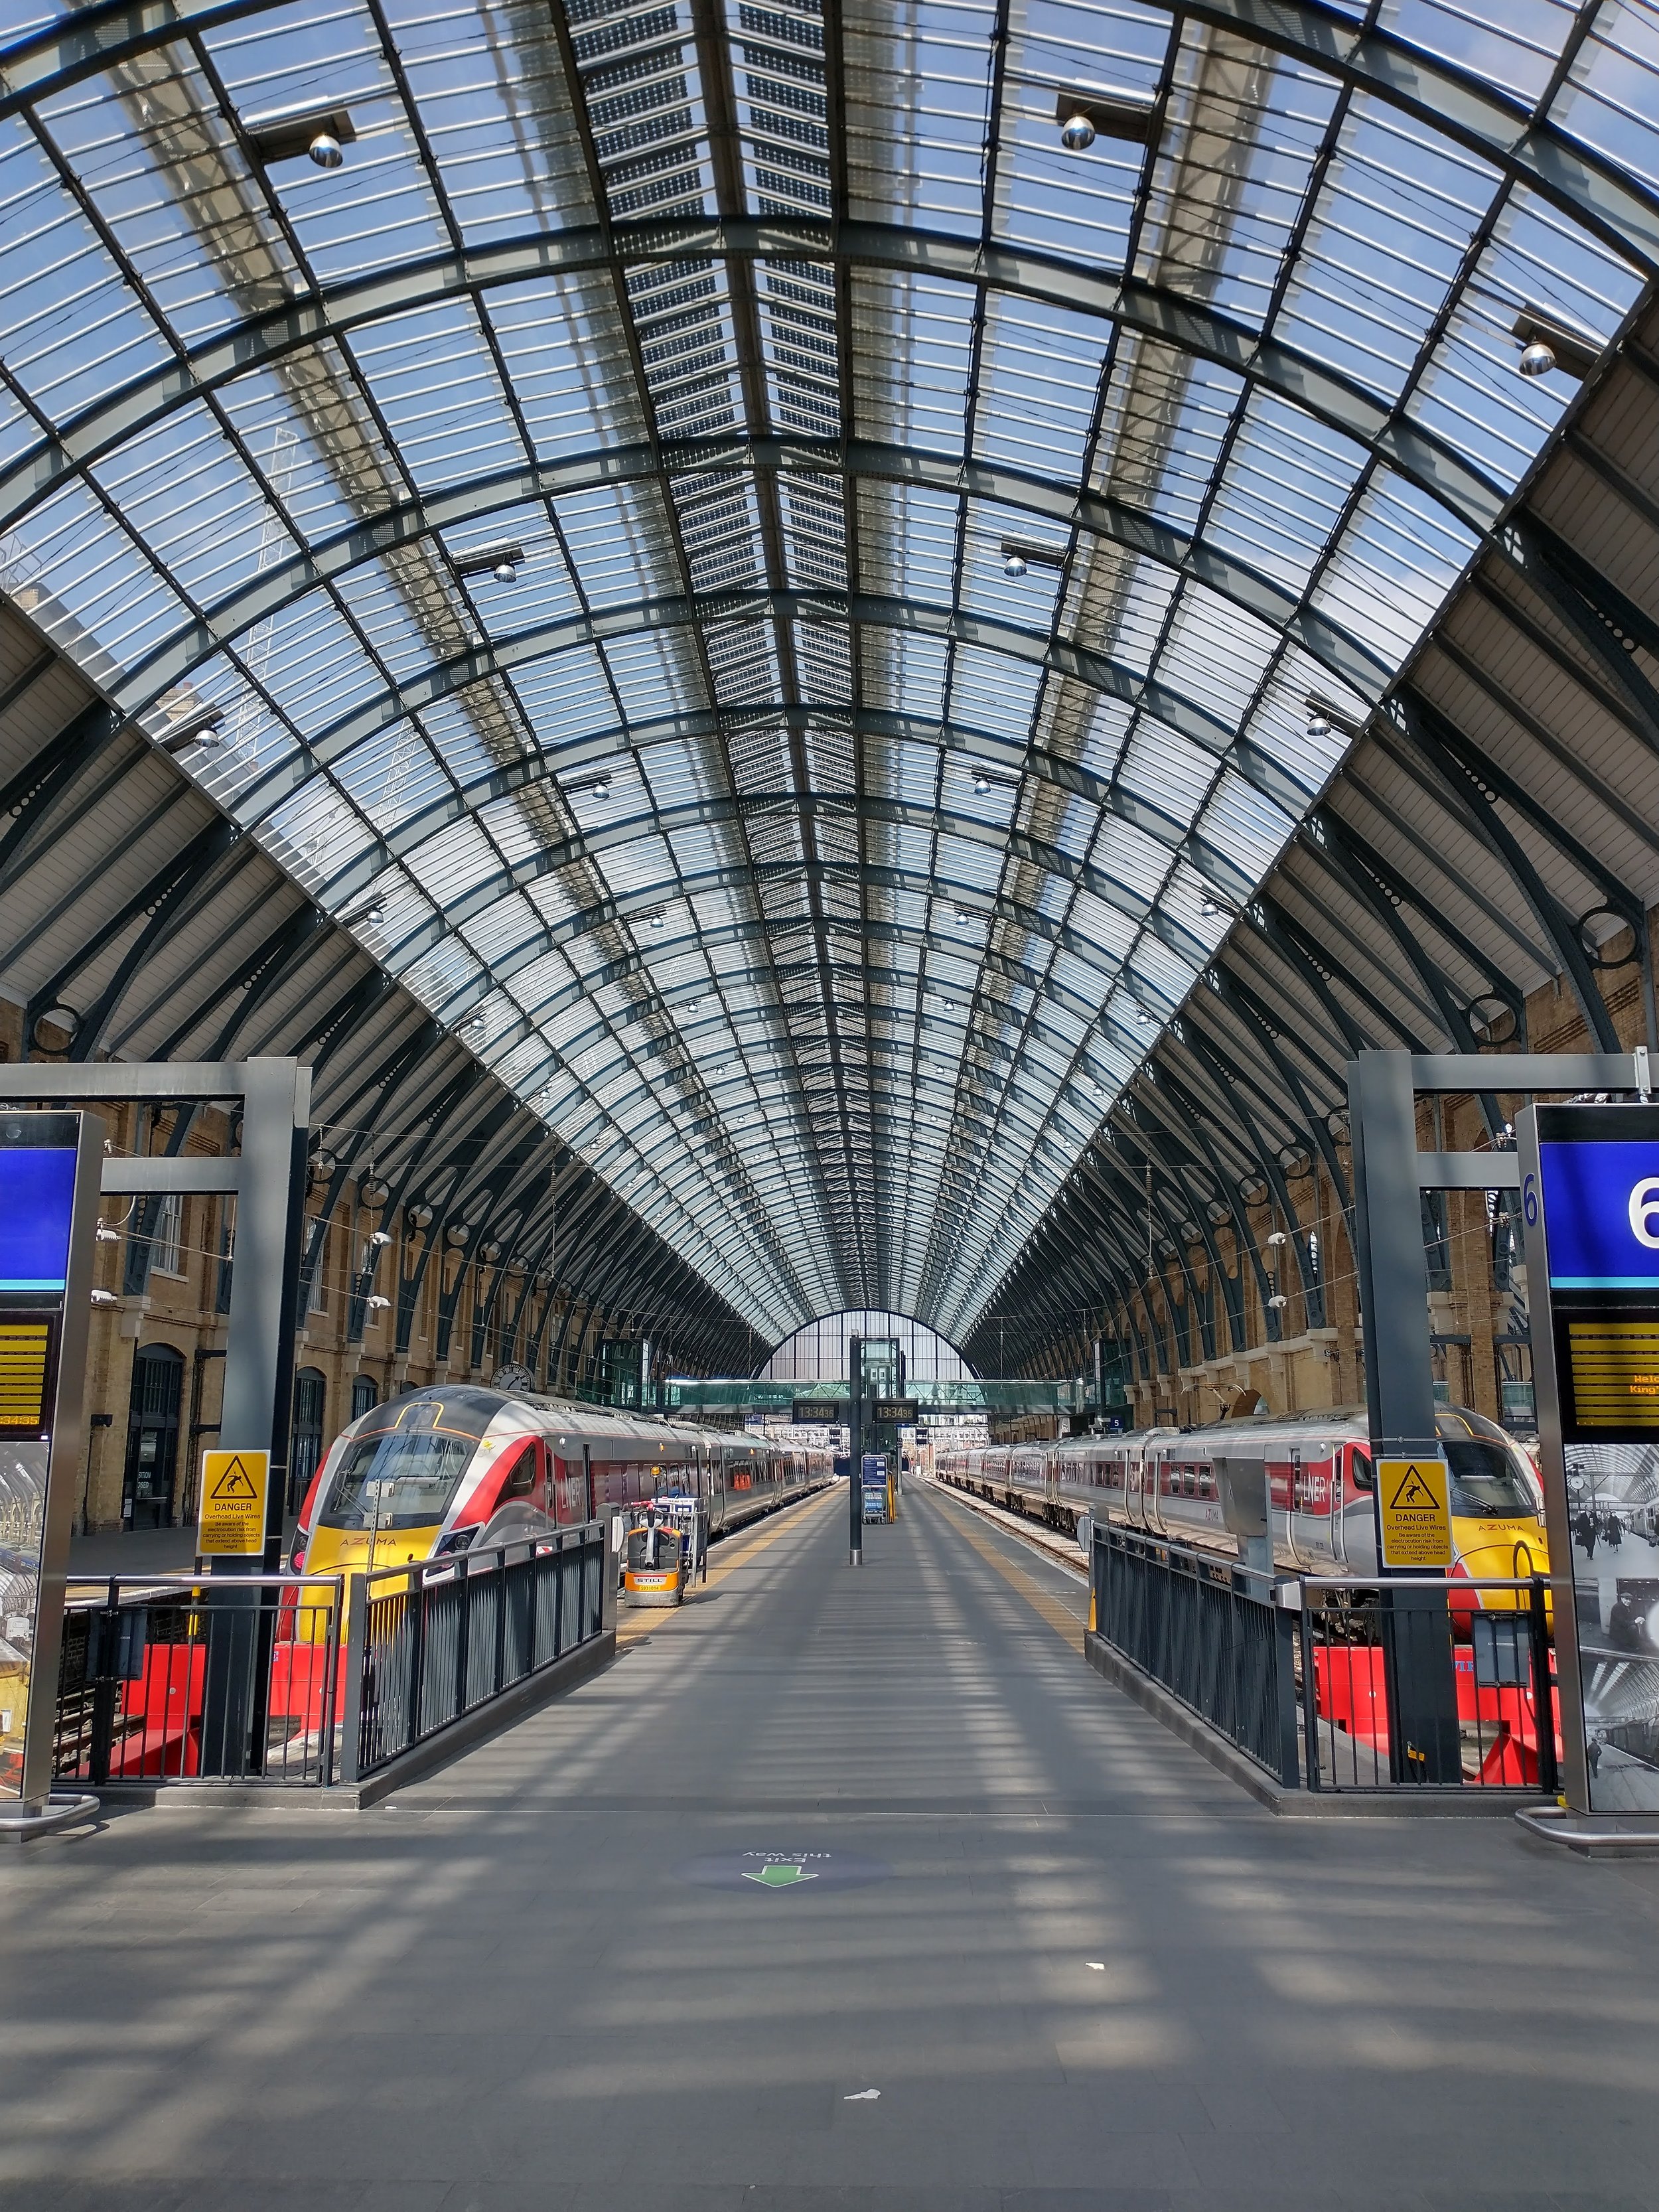 train-platform-at-kings-cross-station-london